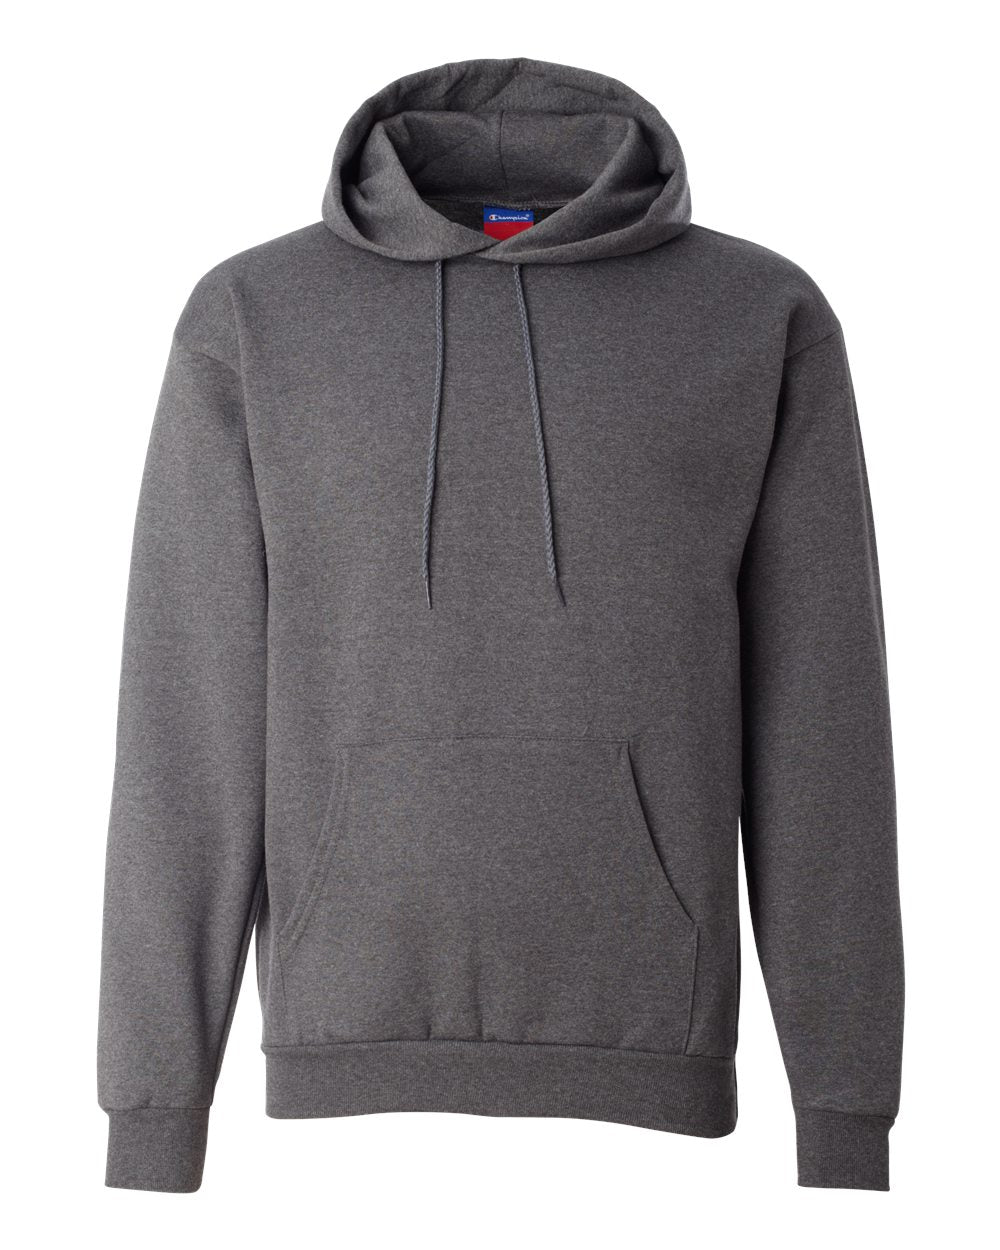 champion powerblend hooded sweatshirt charcoal heather grey